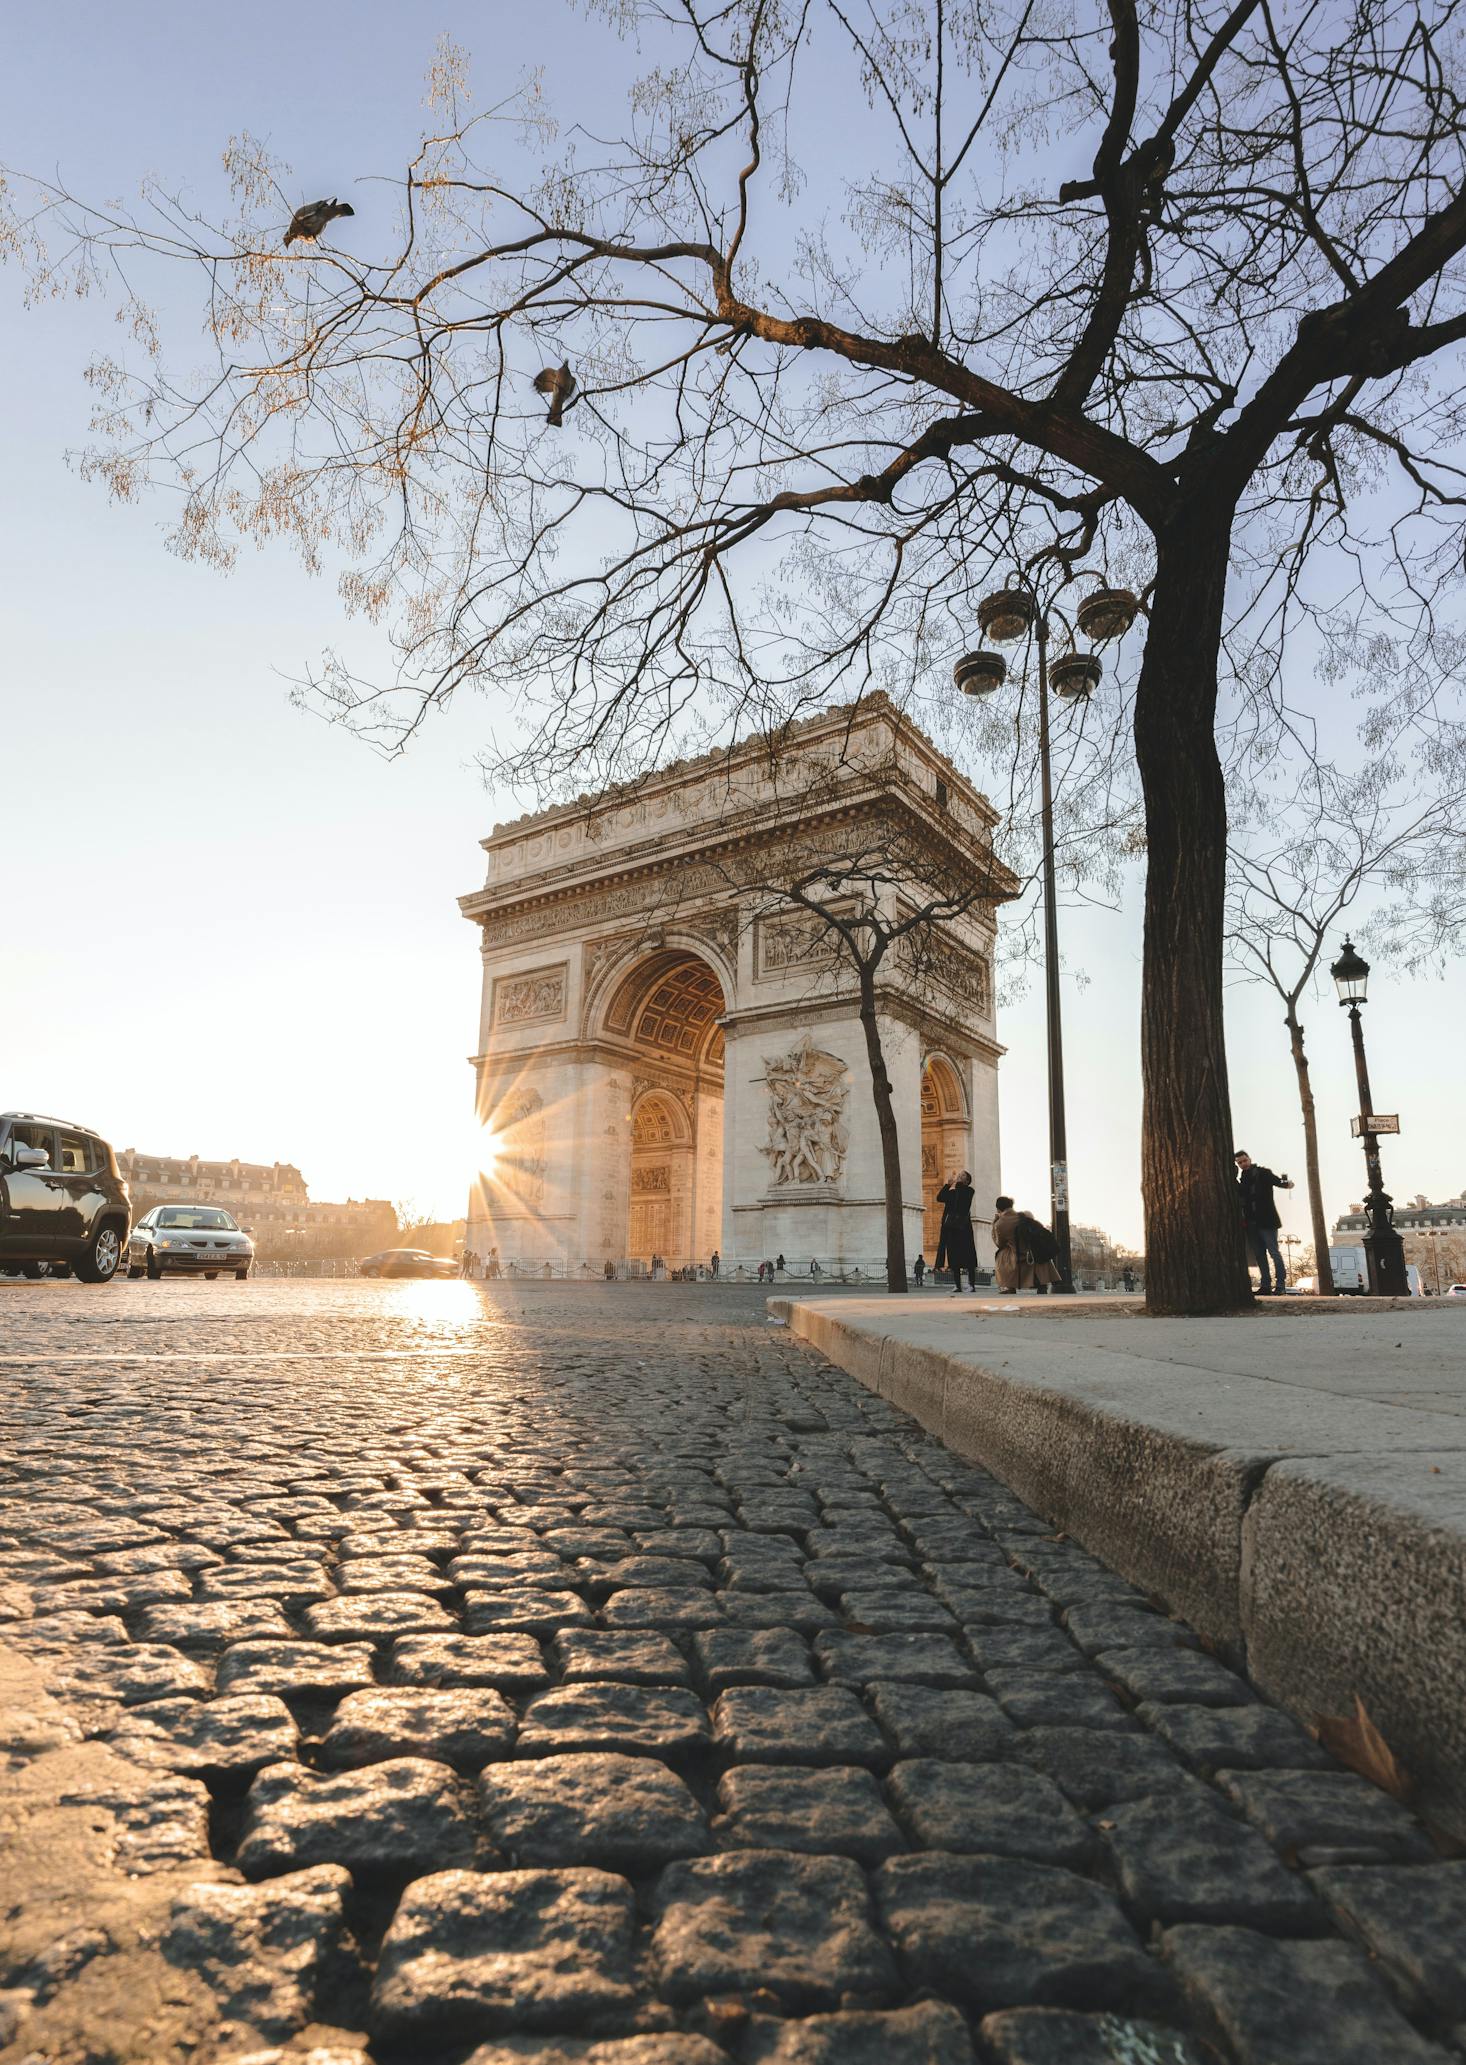 Arch de triomphe in Paris